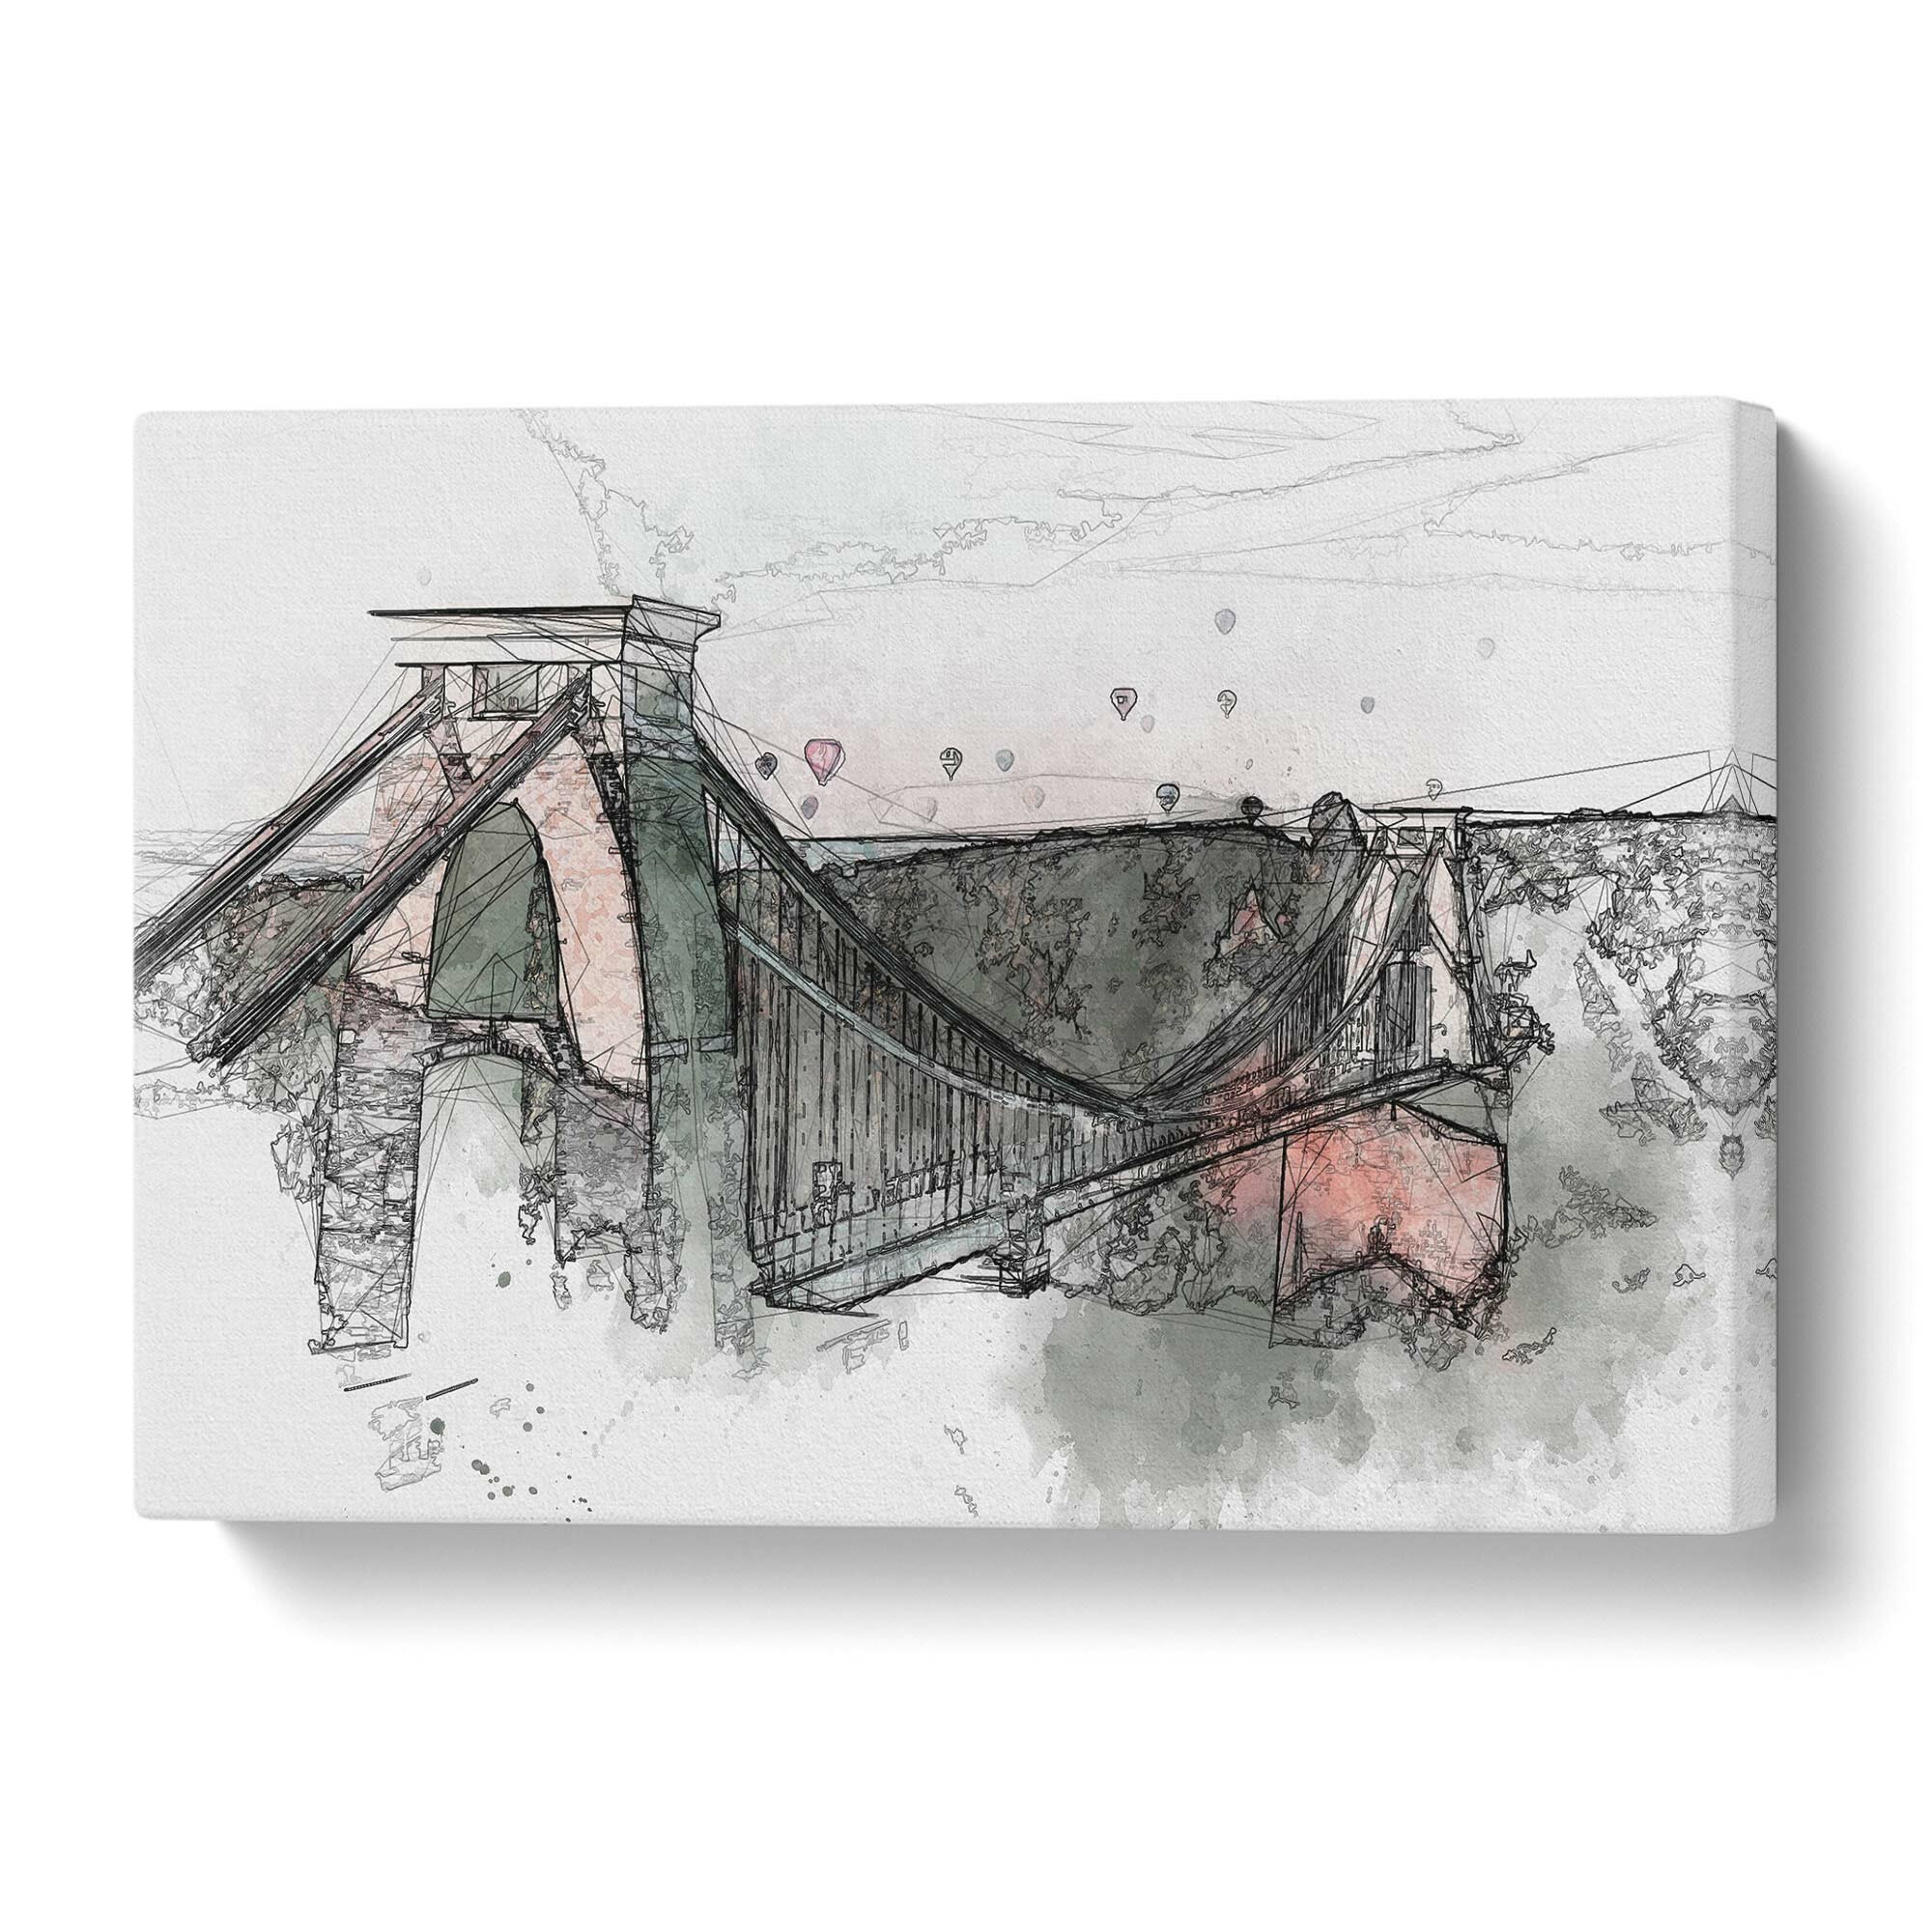 Clifton Suspension Bridge SINGLE CANVAS WALL ART Print Picture